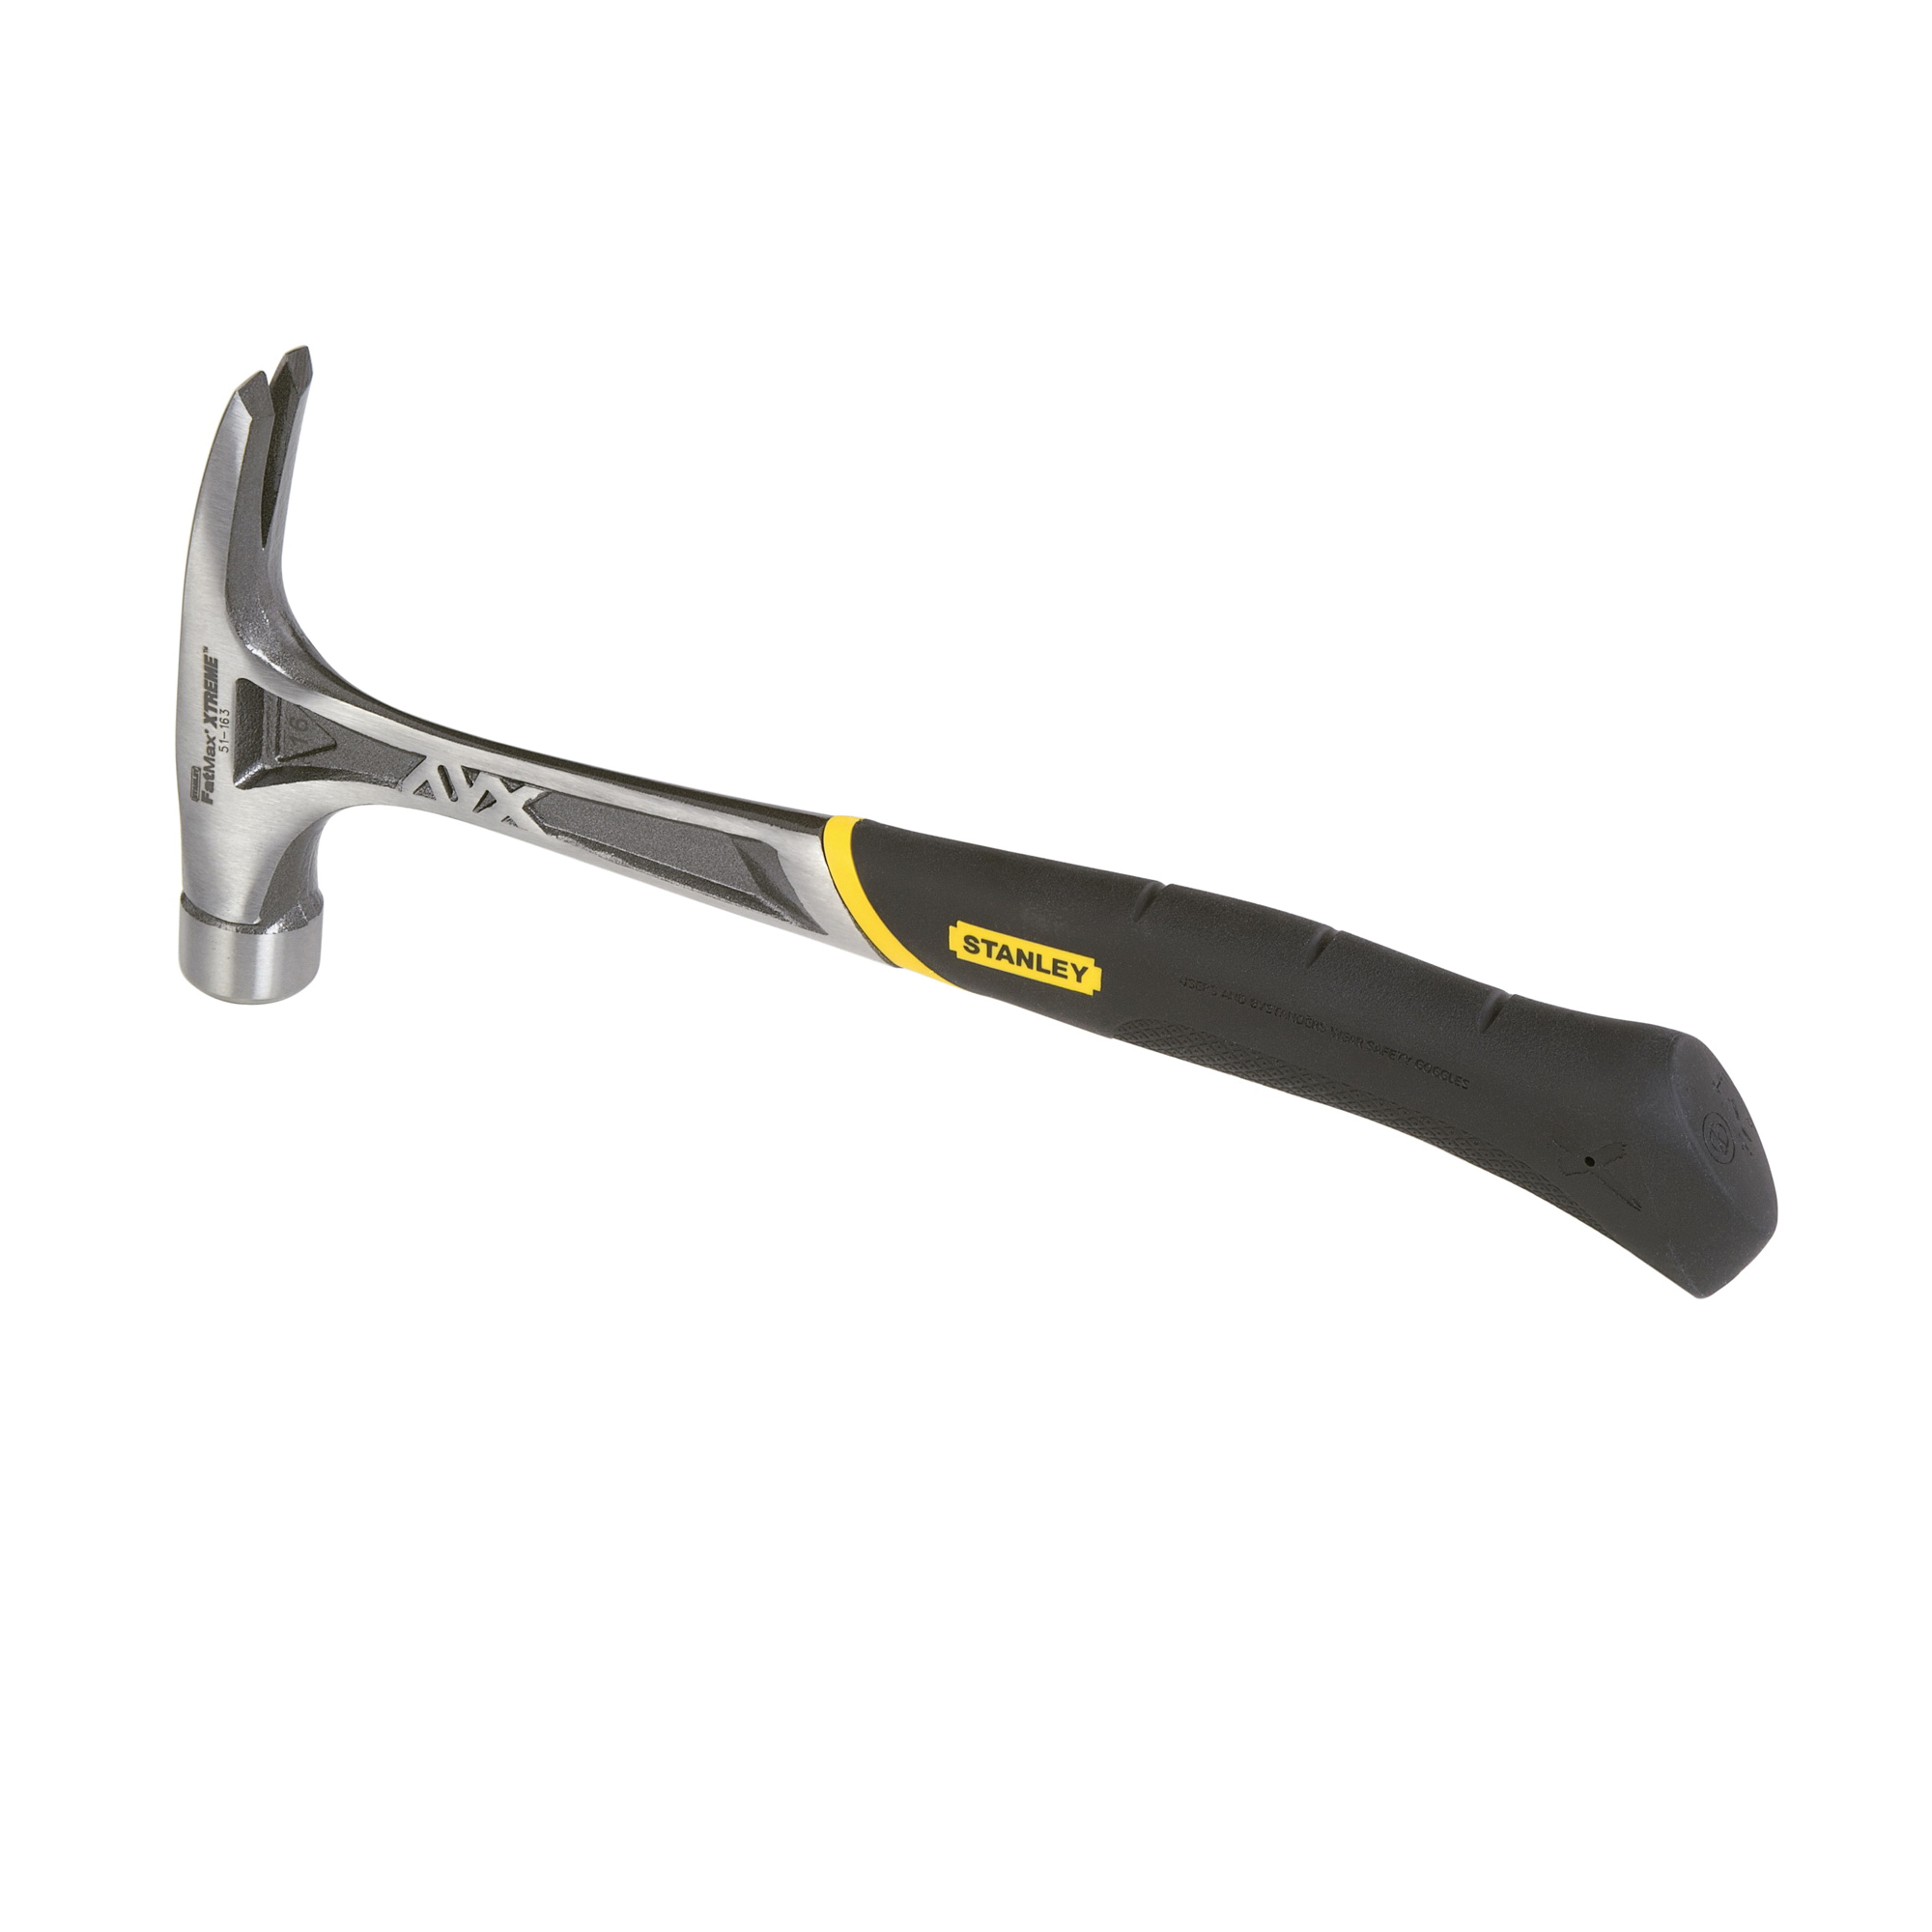 Hand Tools | Hammers  Striking Tools | Hubbard Supply Co.